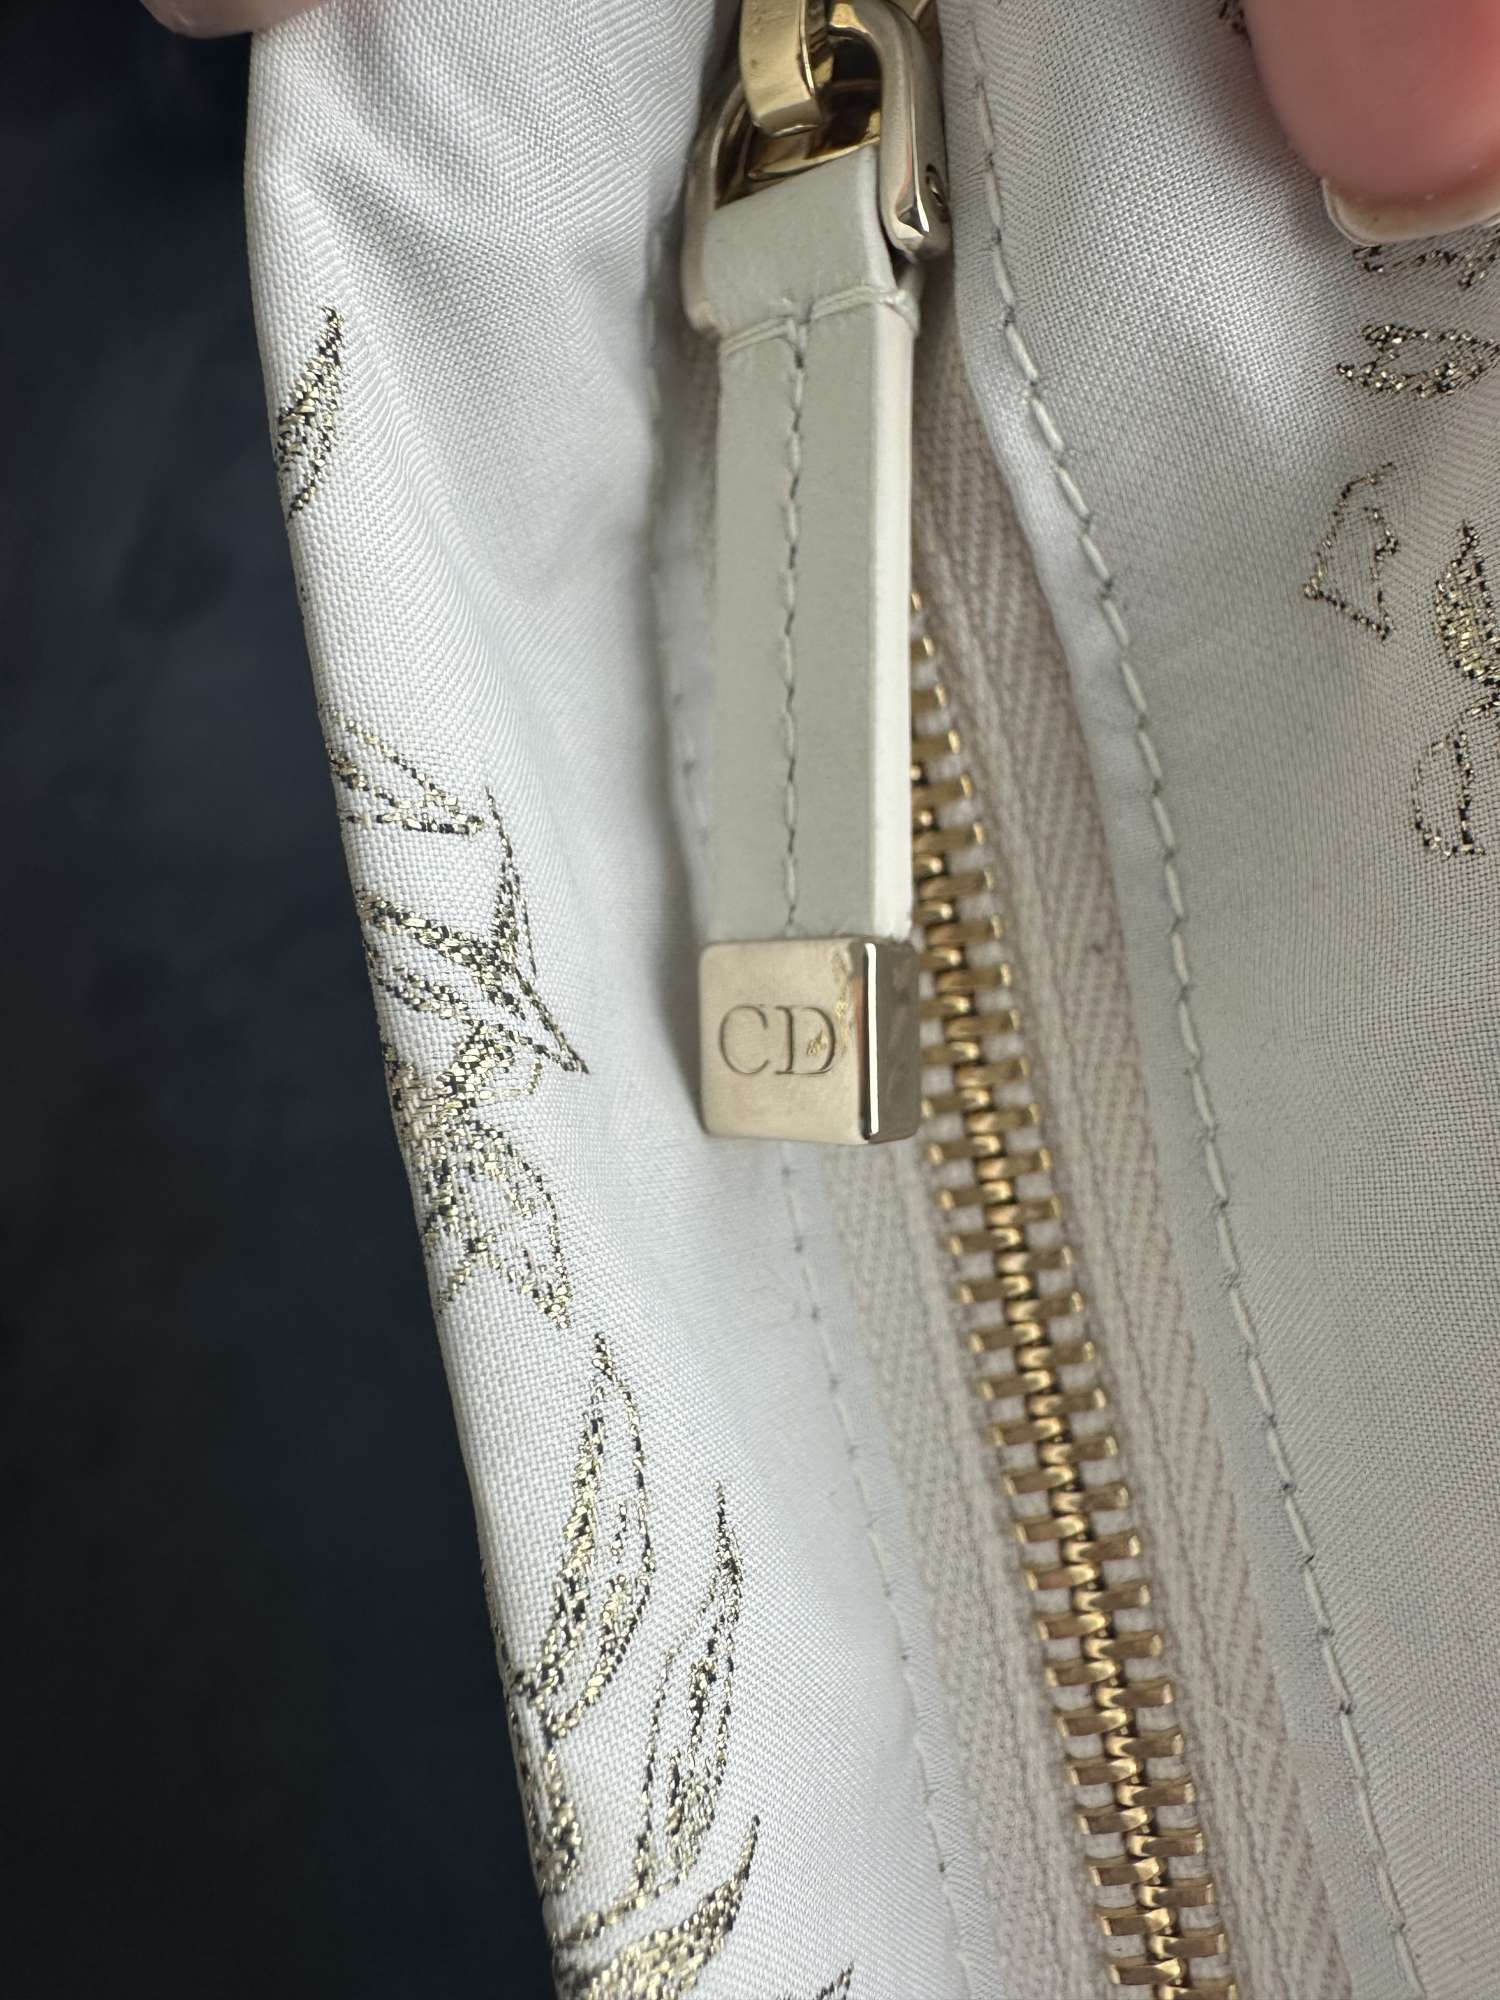 Christian Dior pouch